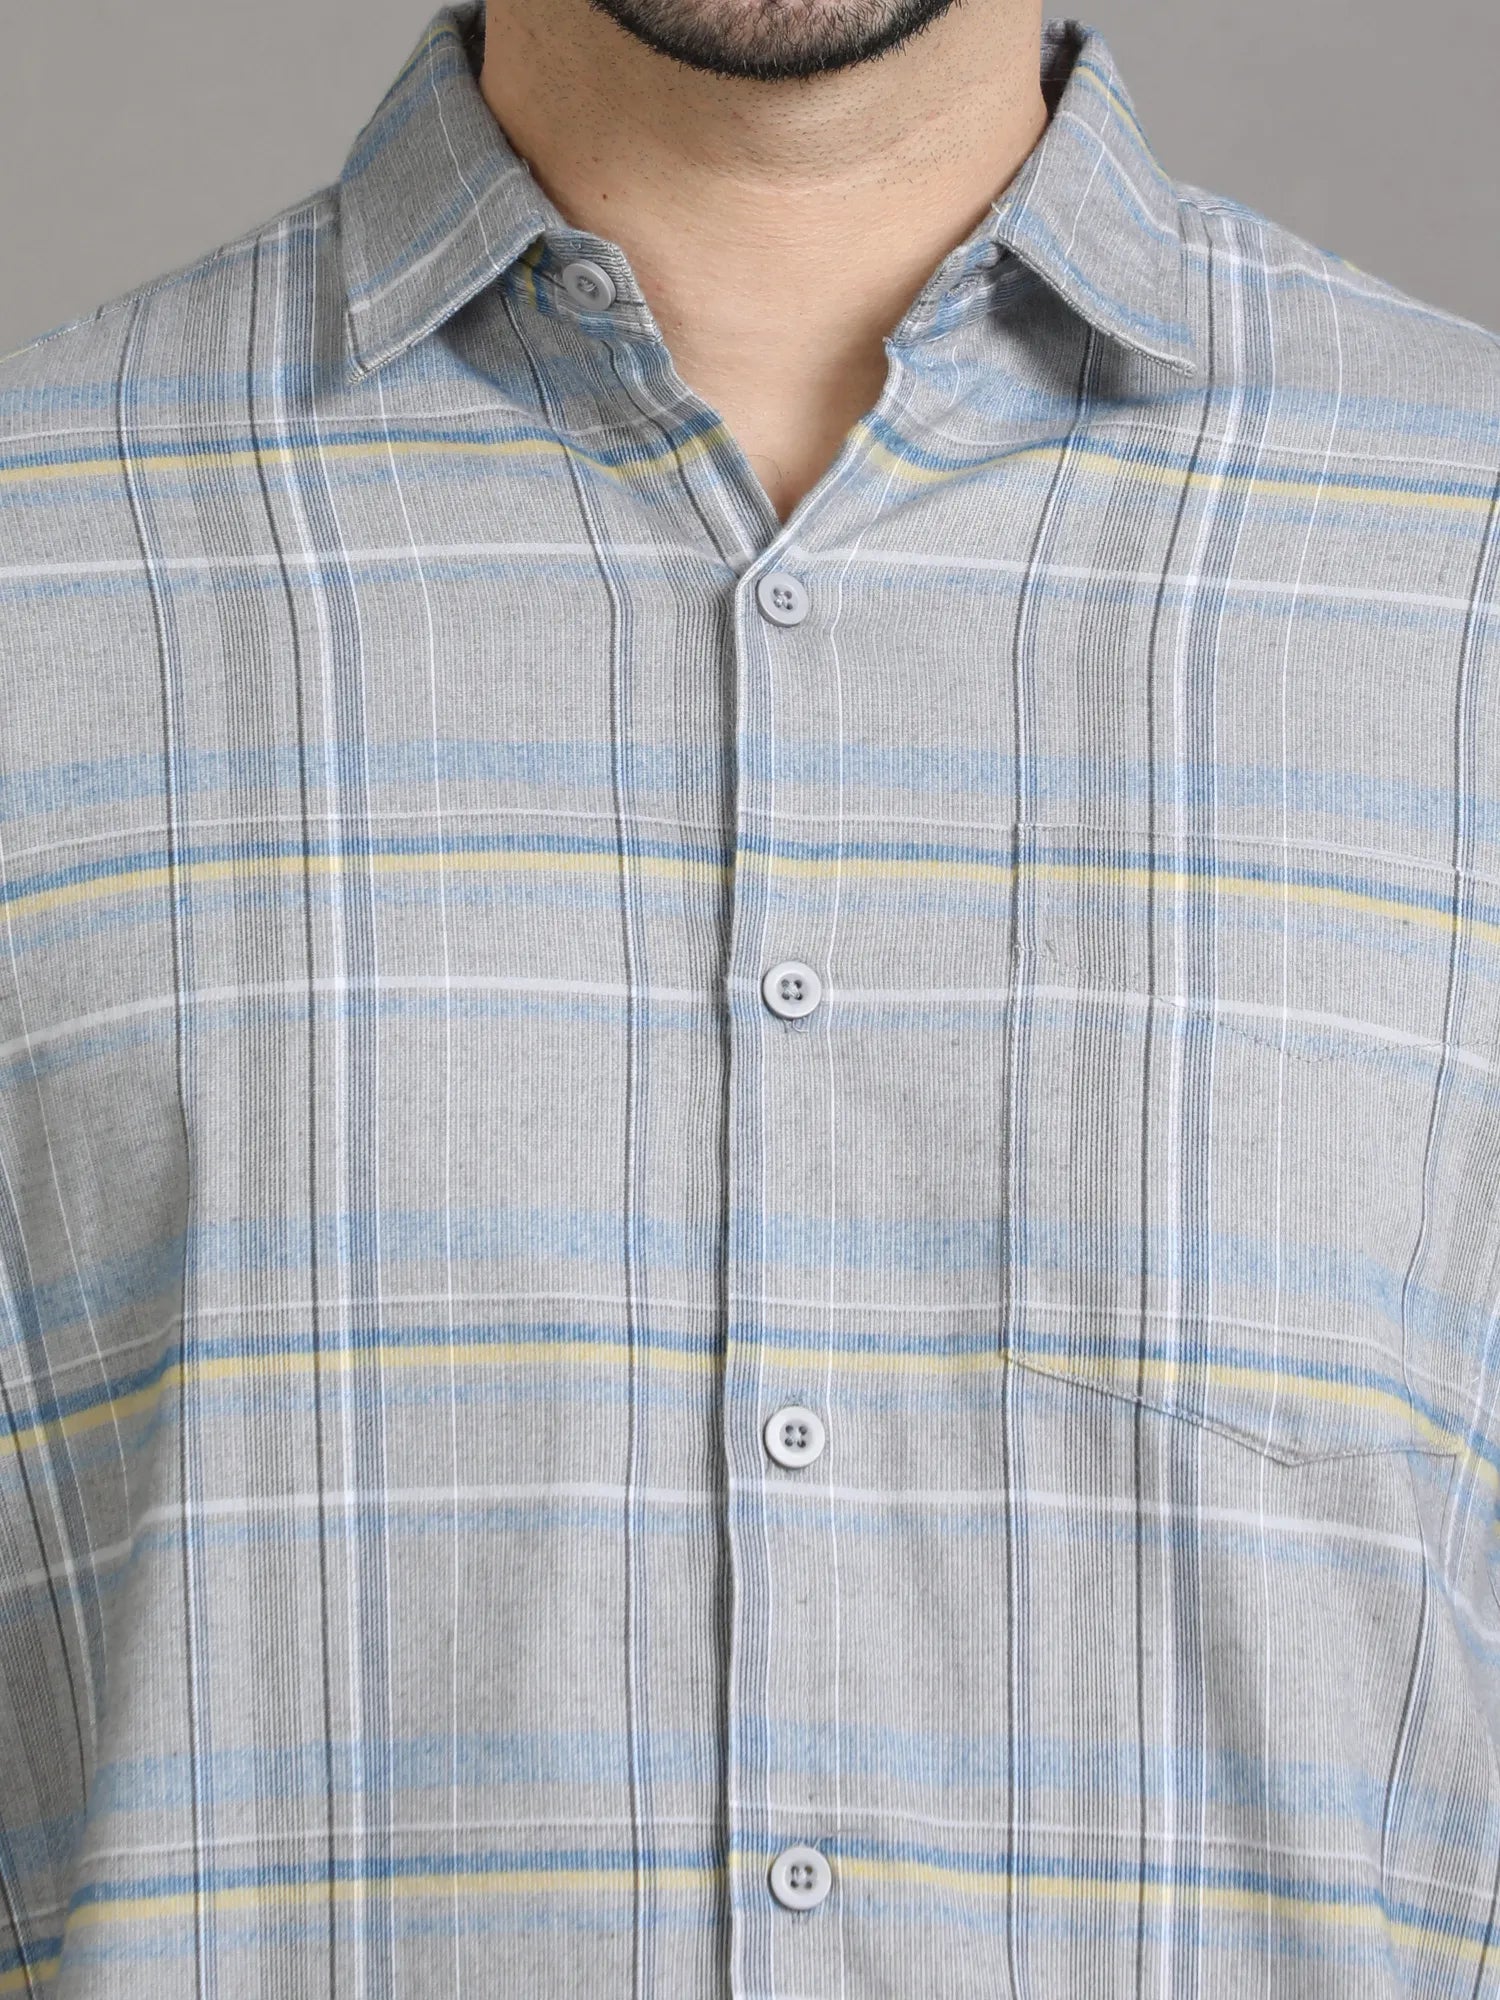 Men's Grey Cord Checkered Shirt 